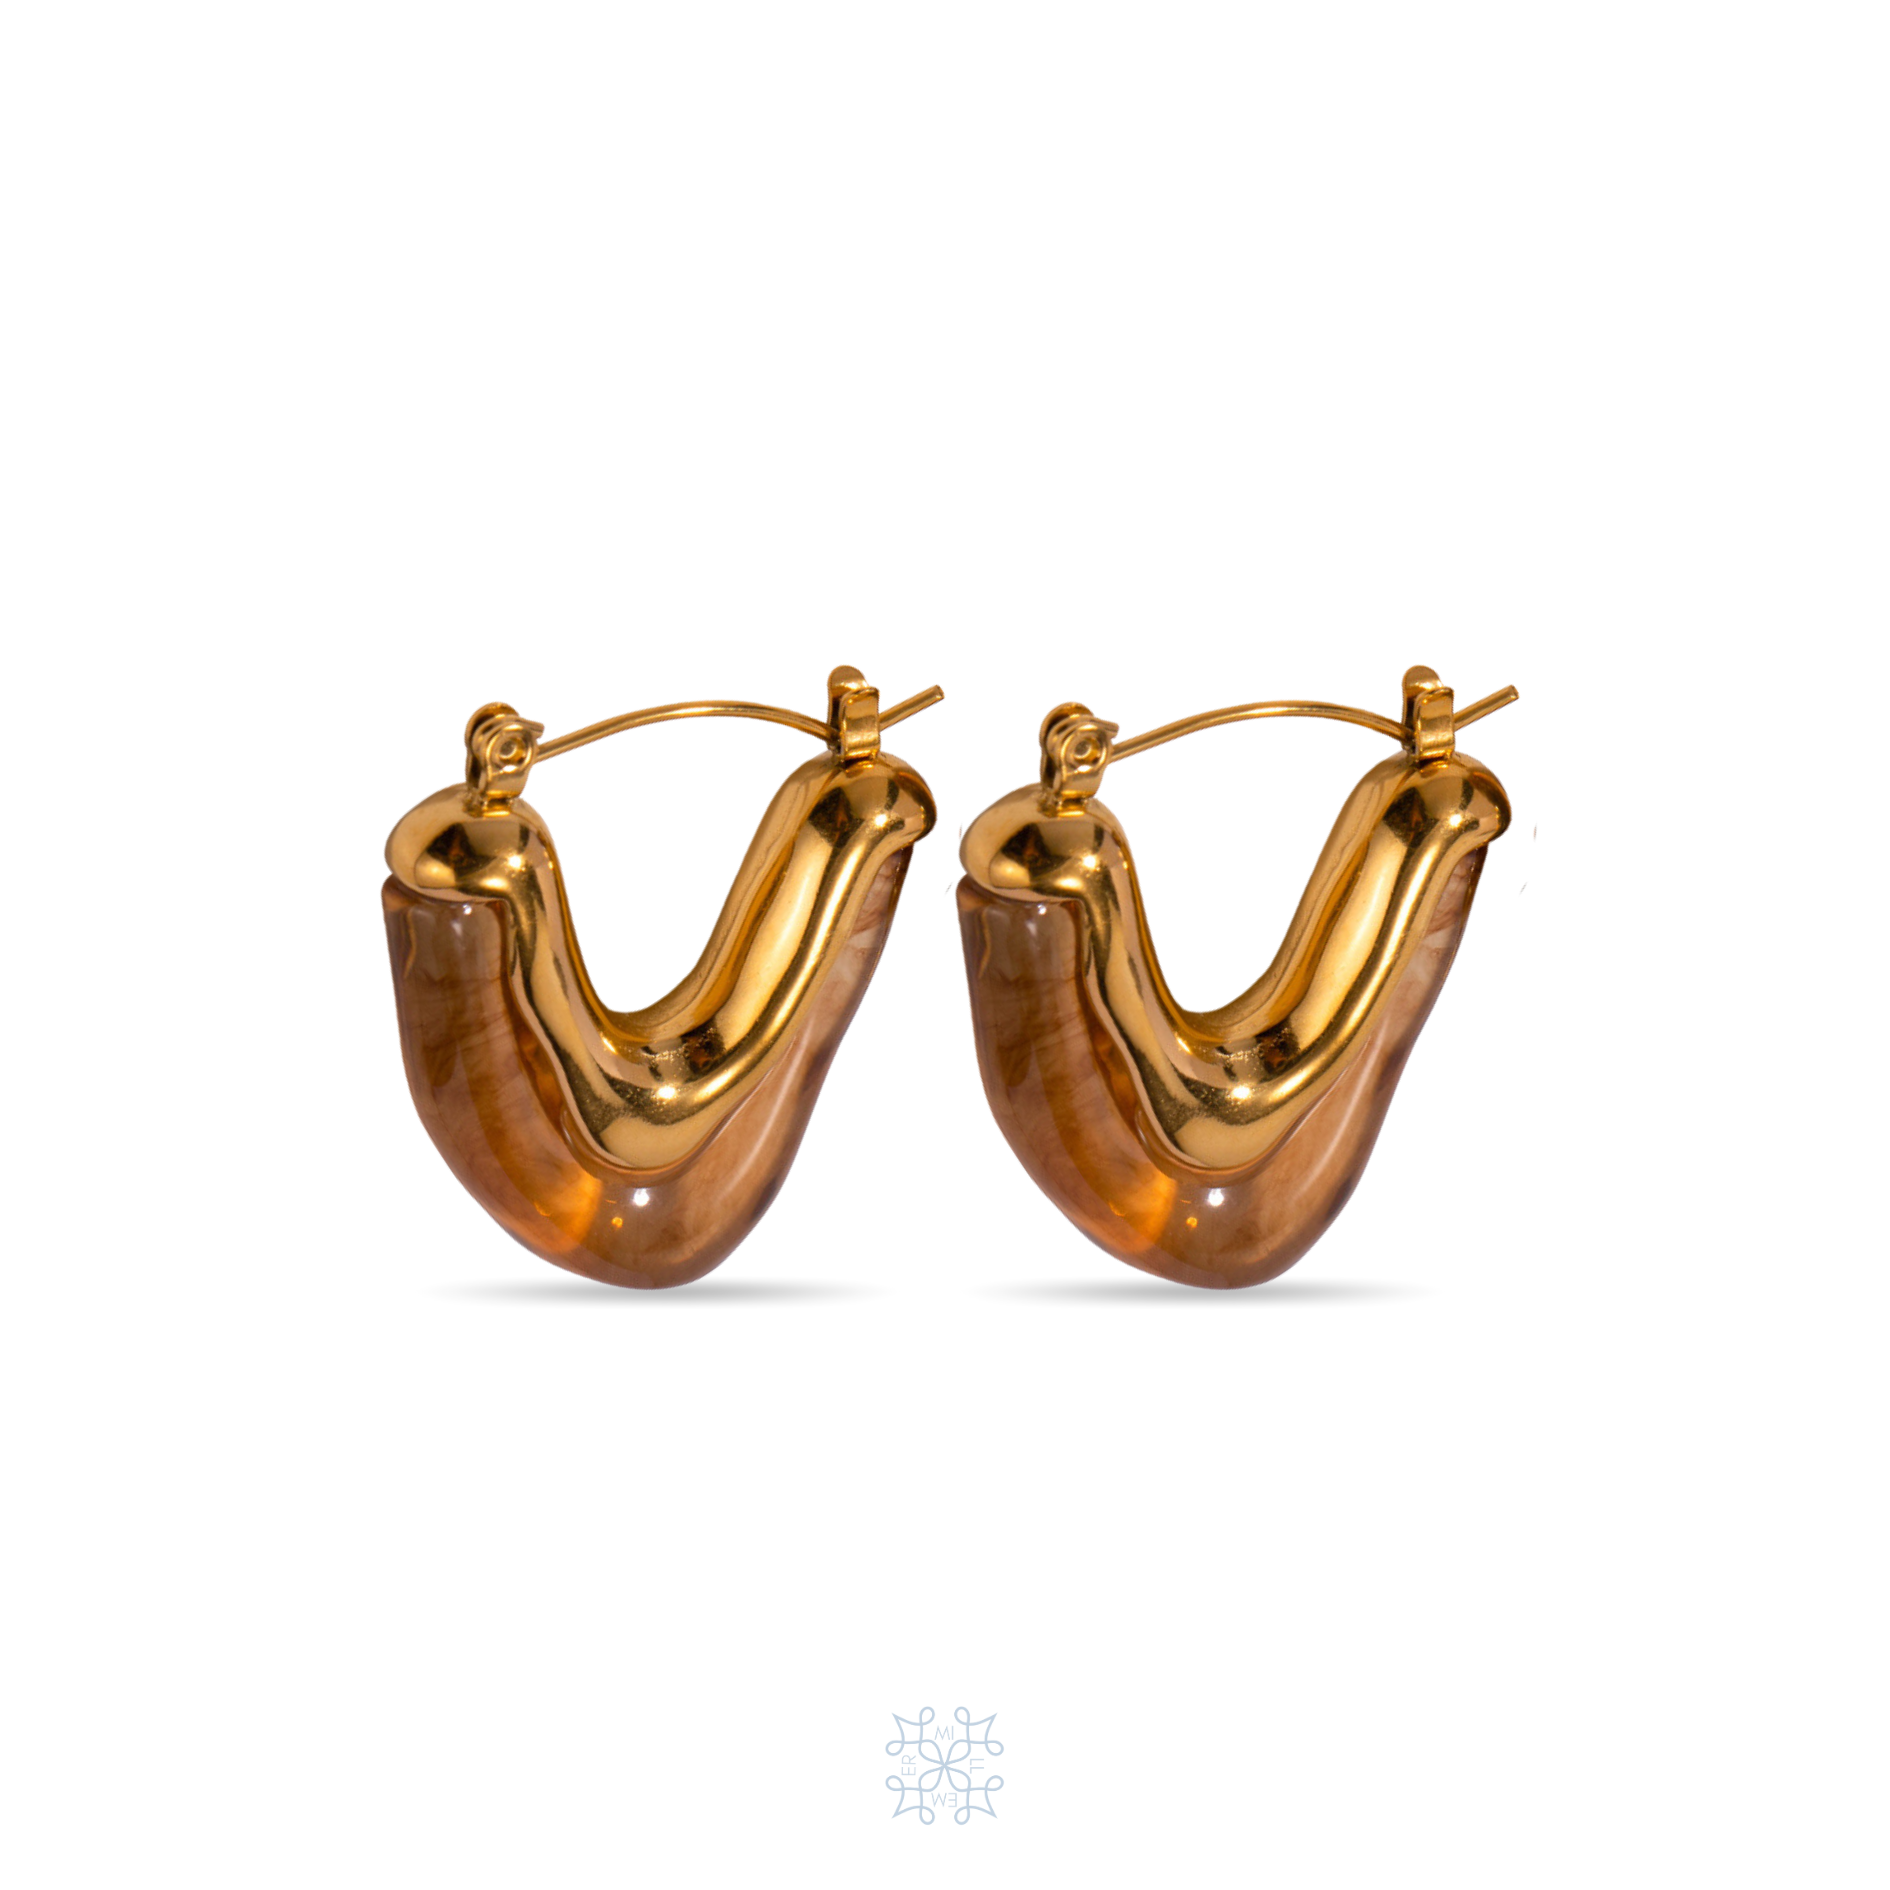 V shape Gold Plated  Hoop Earrings made with Brown Acrylic. Waterproof Earrings.